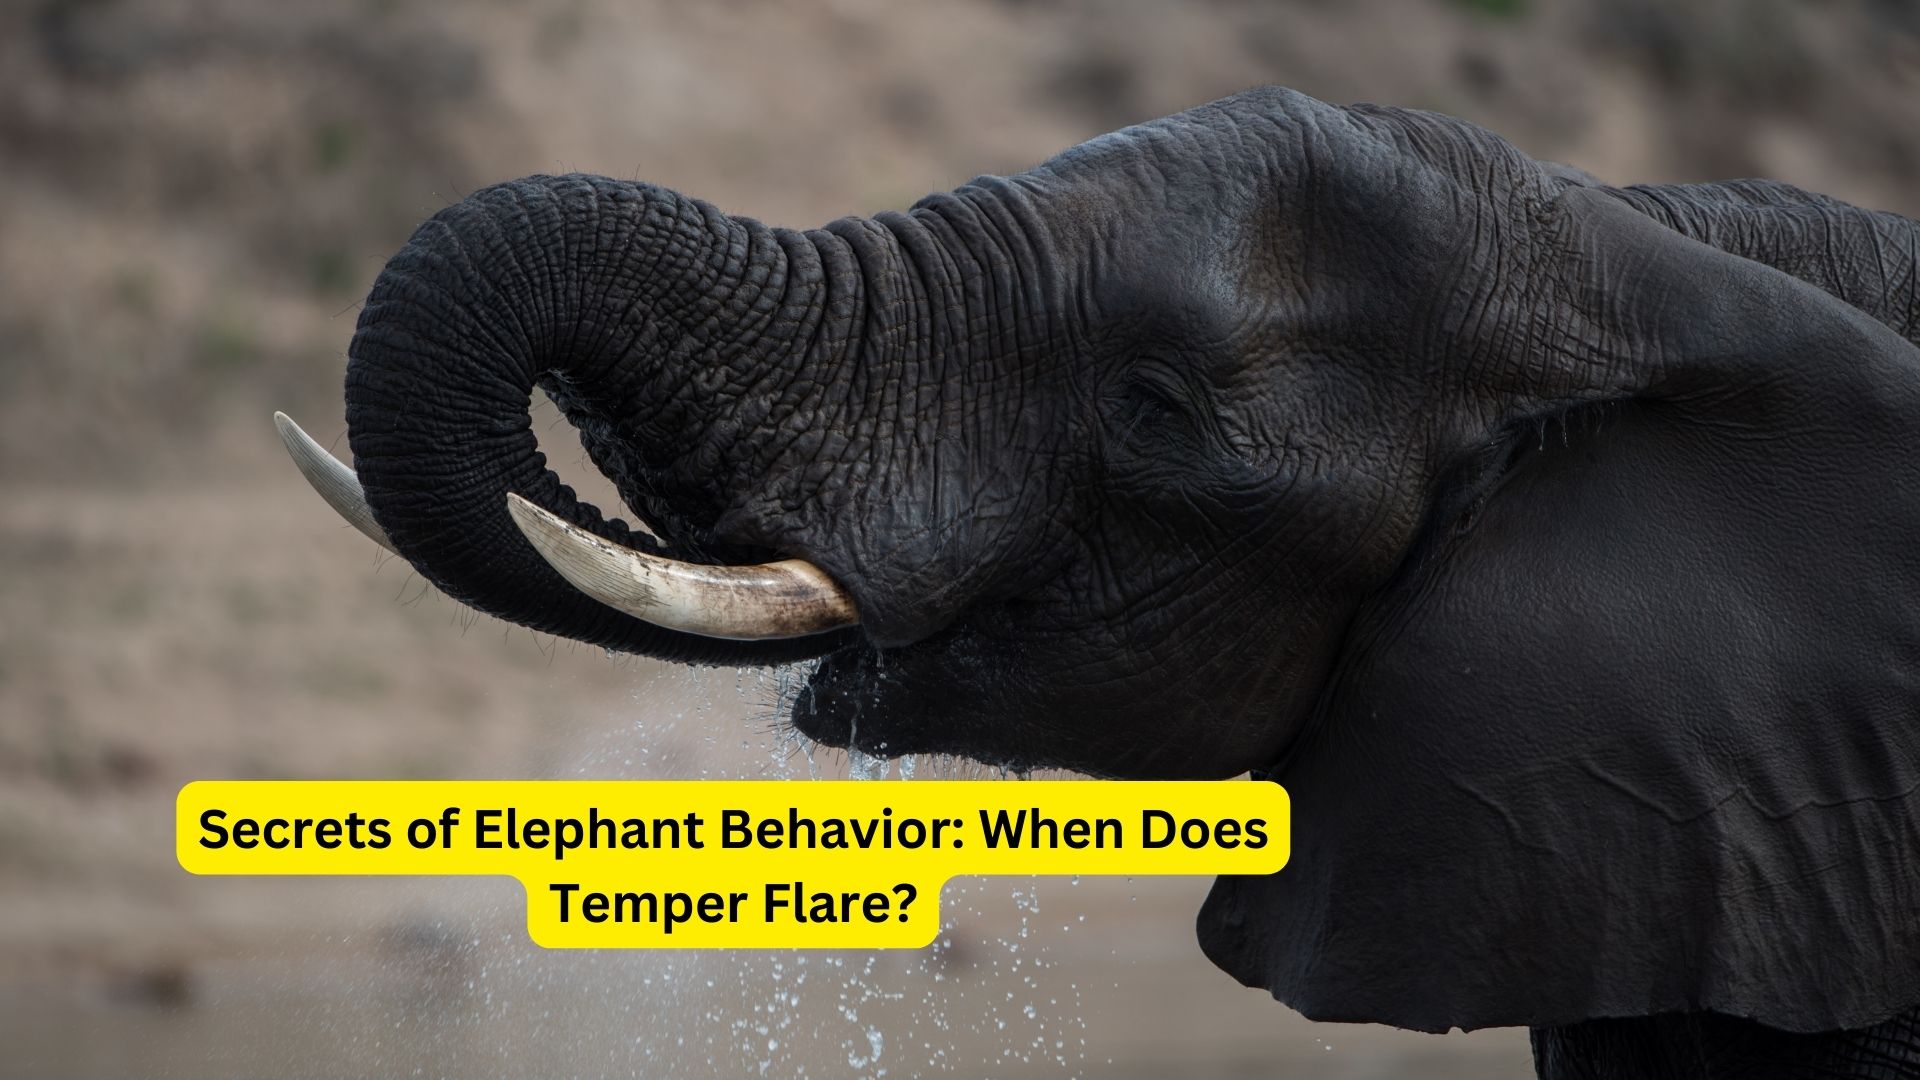 Secrets of Elephant Behavior: When Does Temper Flare?